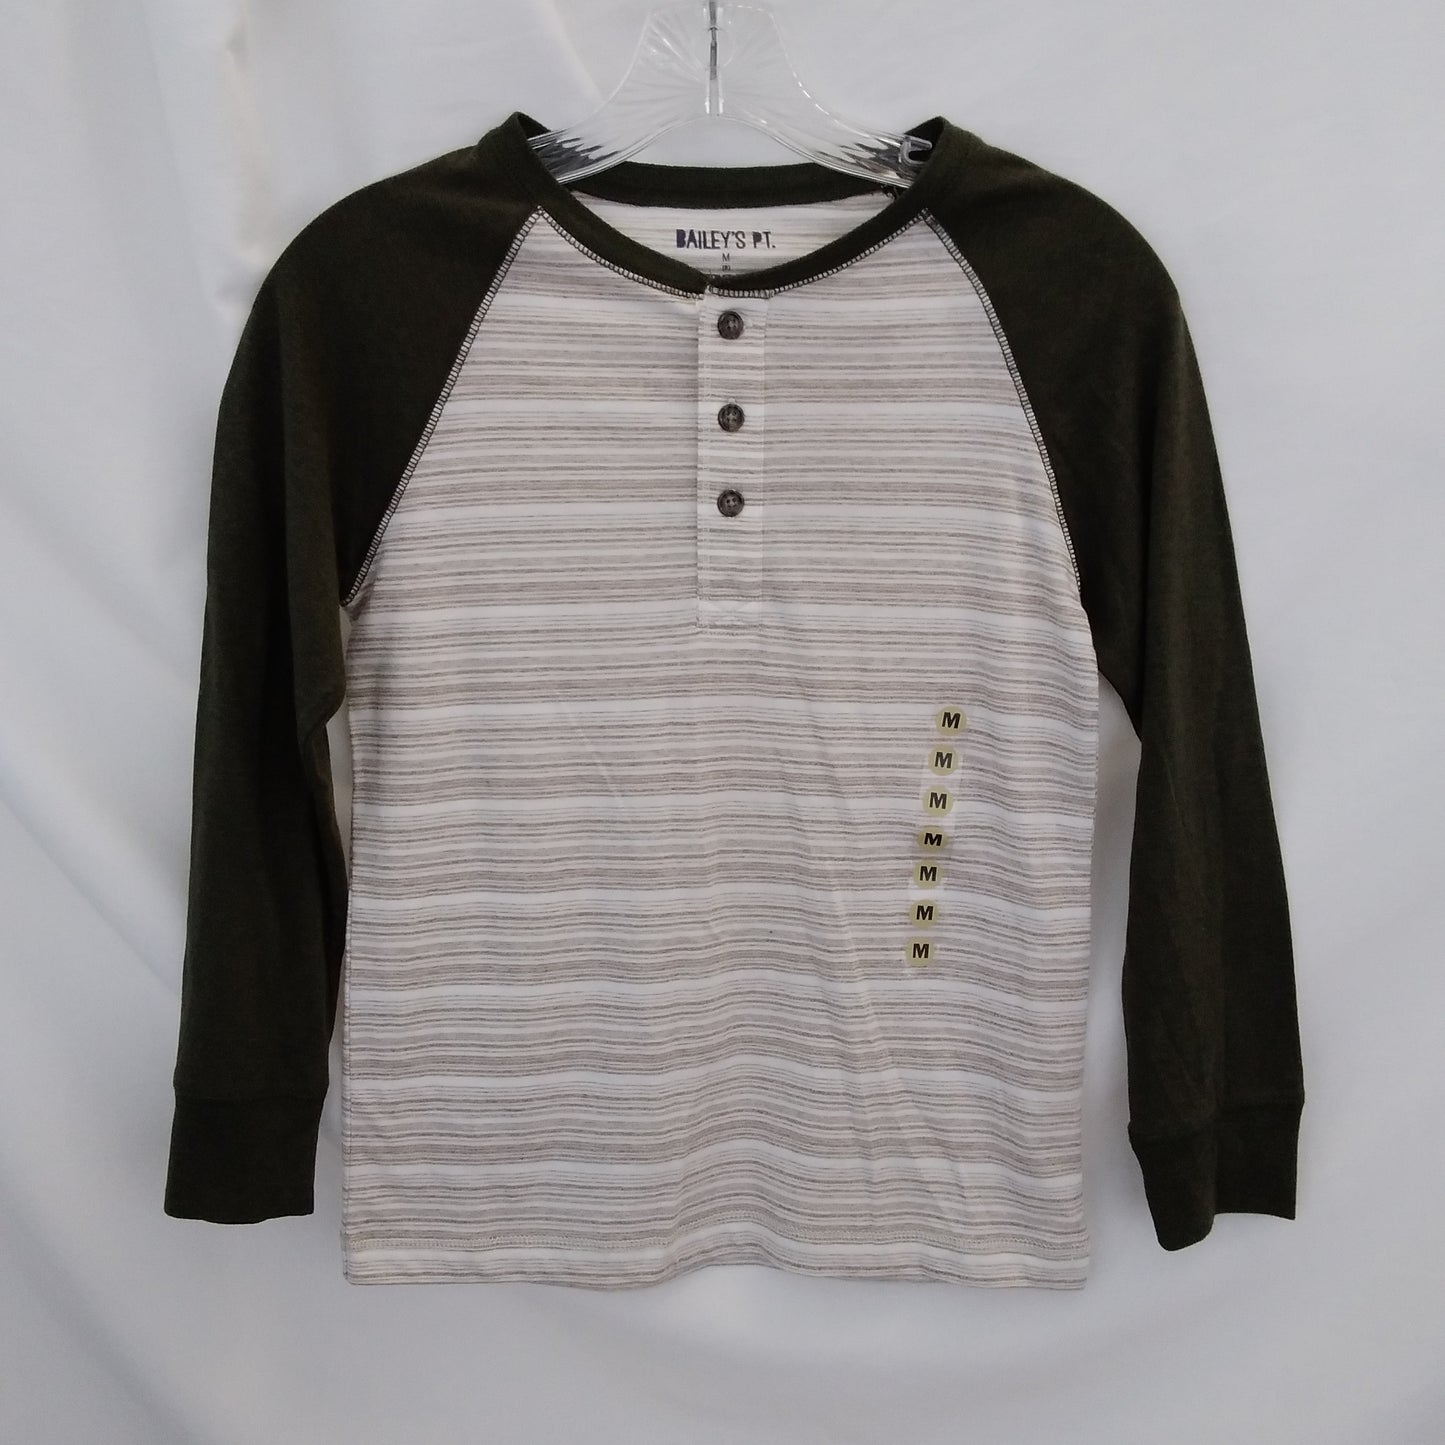 NWT - Bailey's Pt Boy's 3/4 Button Long Sleeve Shirt - Size: M (8)